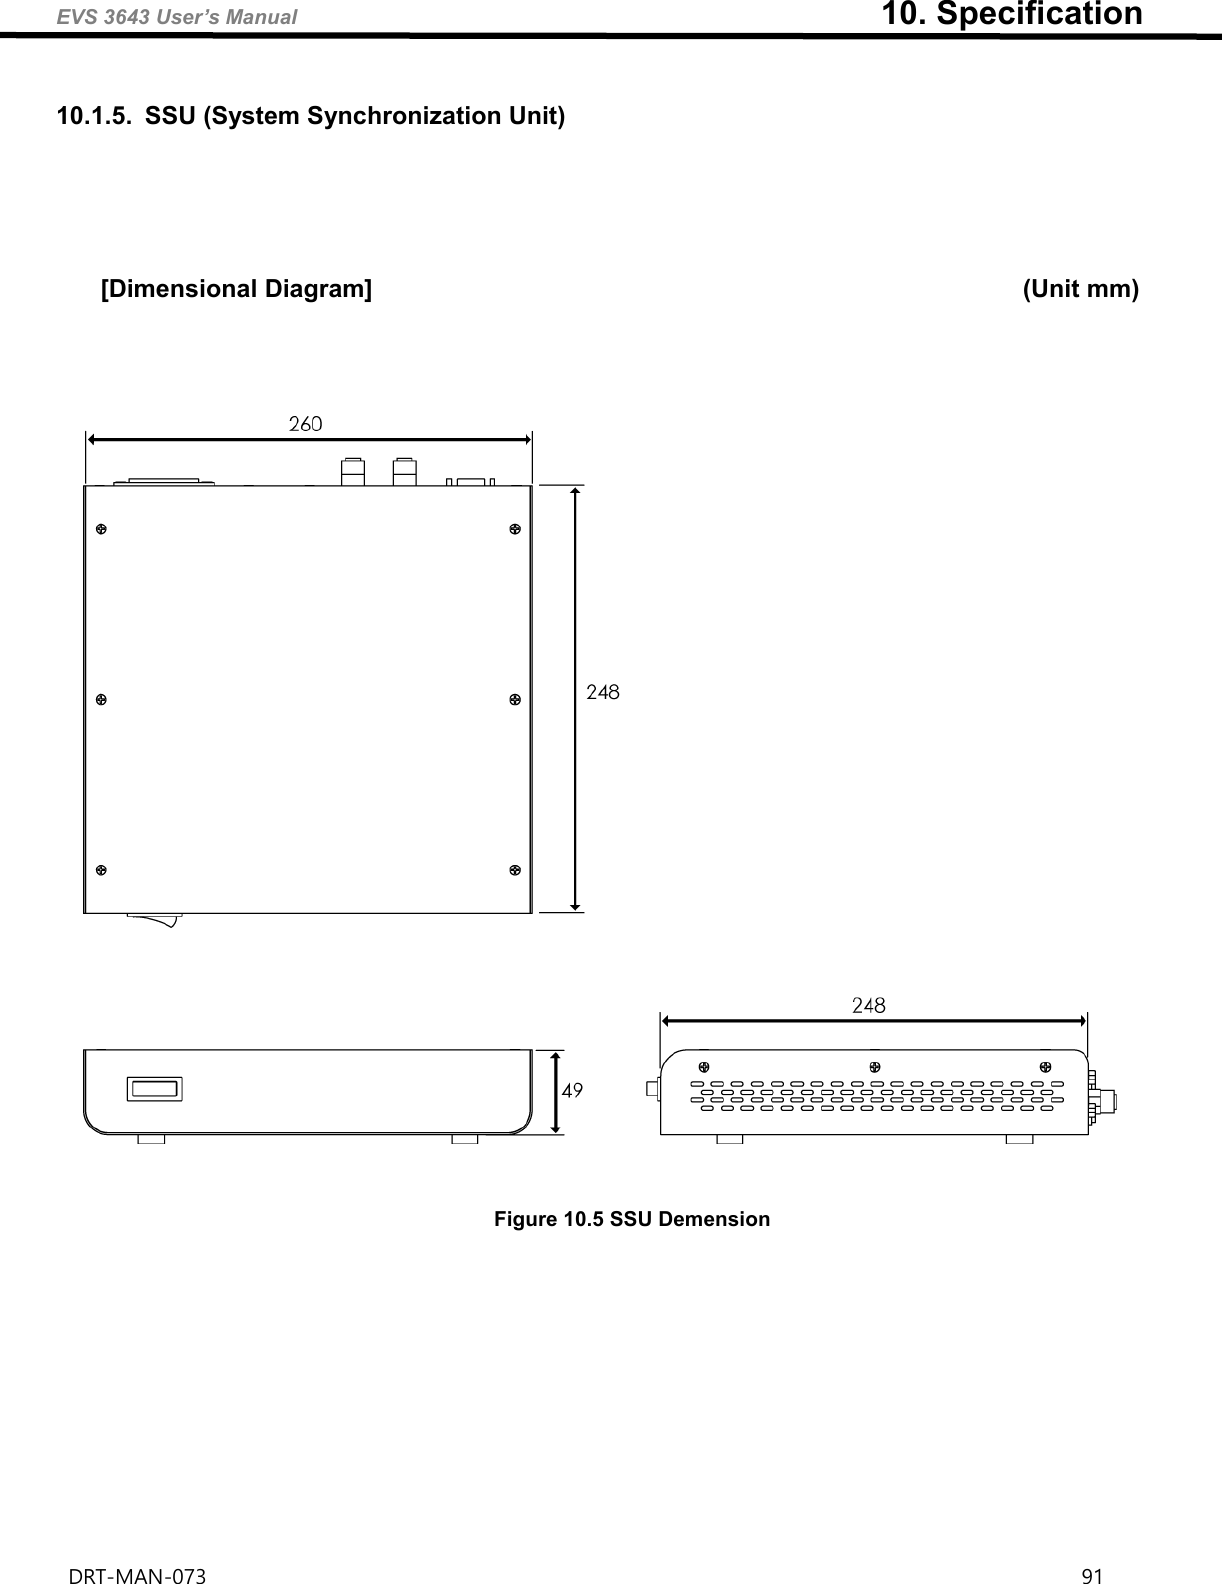 EVS 3643 User’s Manual                                                                      10. Specification DRT-MAN-073                                                                                                                                                                91    10.1.5.  SSU (System Synchronization Unit)      [Dimensional Diagram]                                                    (Unit mm)        Figure 10.5 SSU Demension      